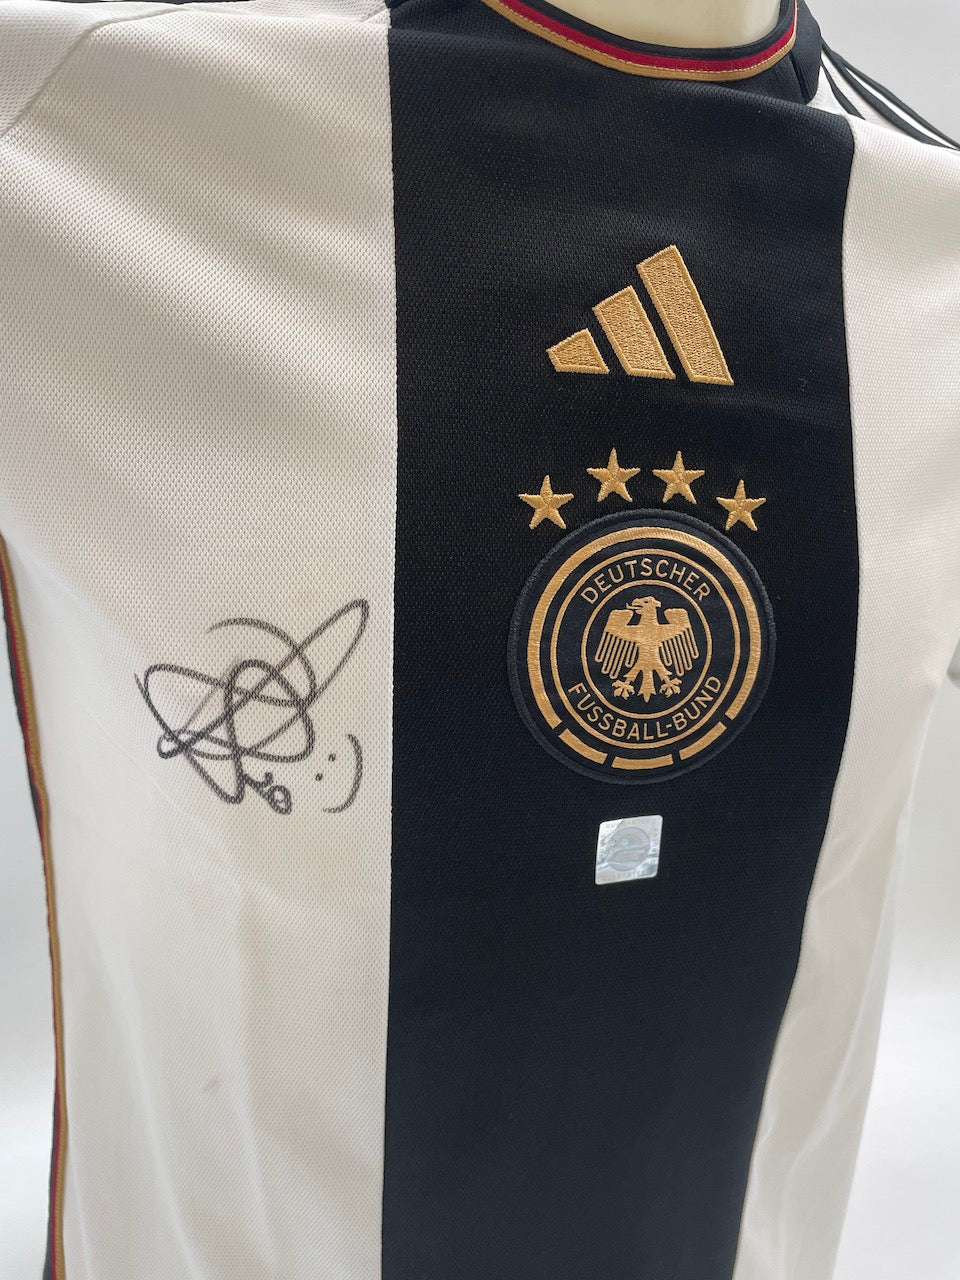 DFB Trikot Robin Gosens signiert Adidas COA Deutschland DFB 164